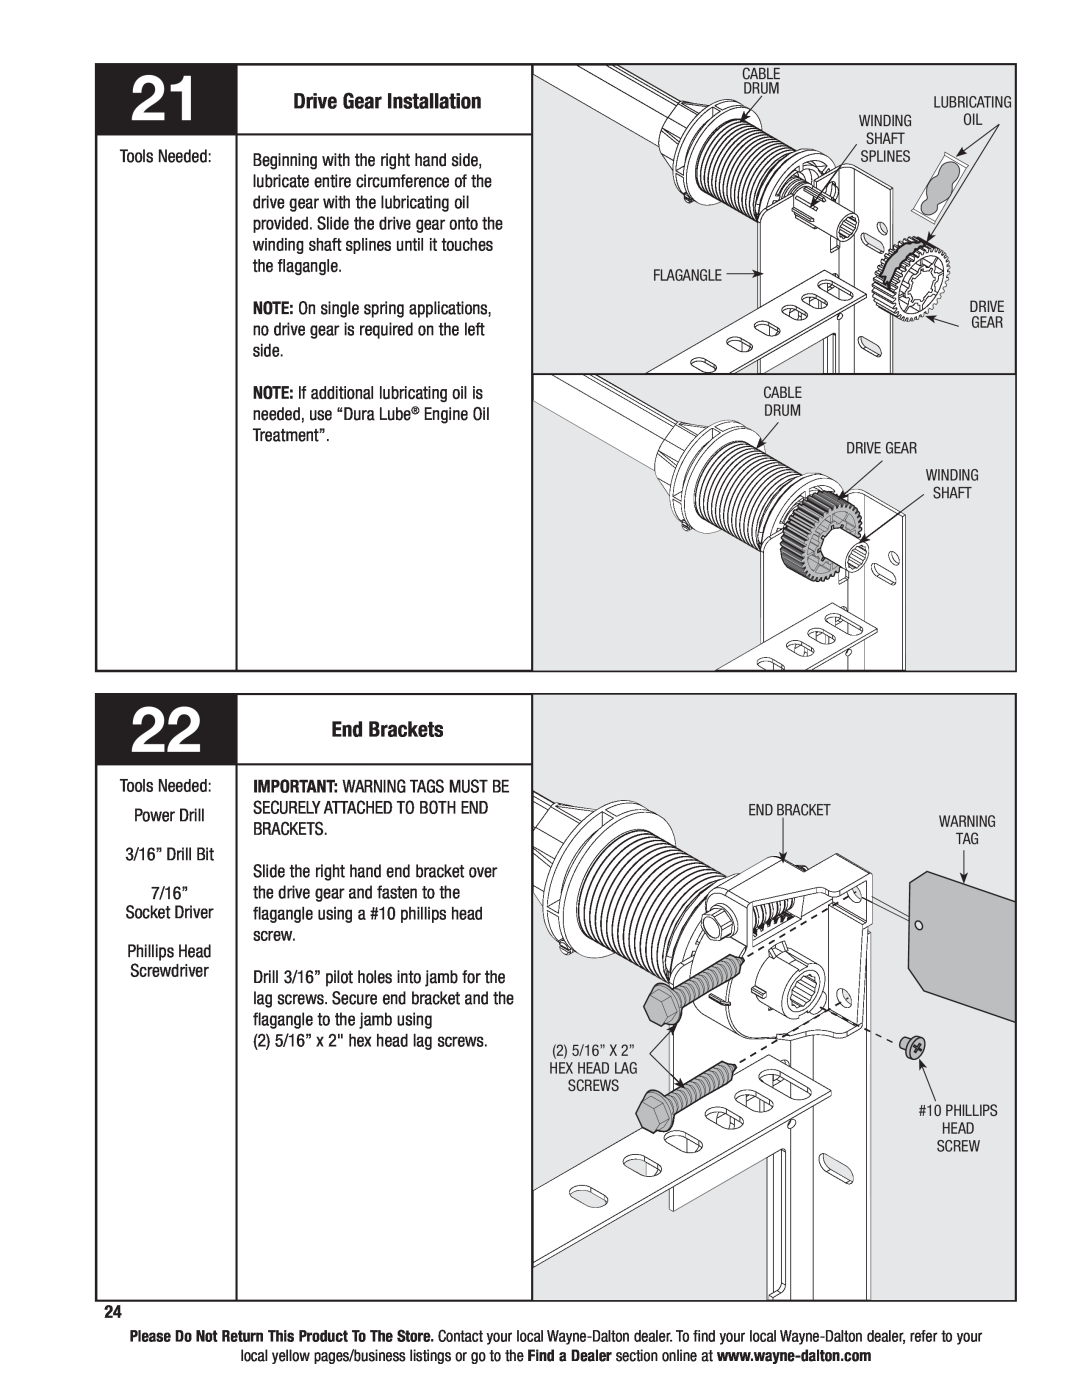 Wayne-Dalton 46 installation instructions Drive Gear Installation, End Brackets 